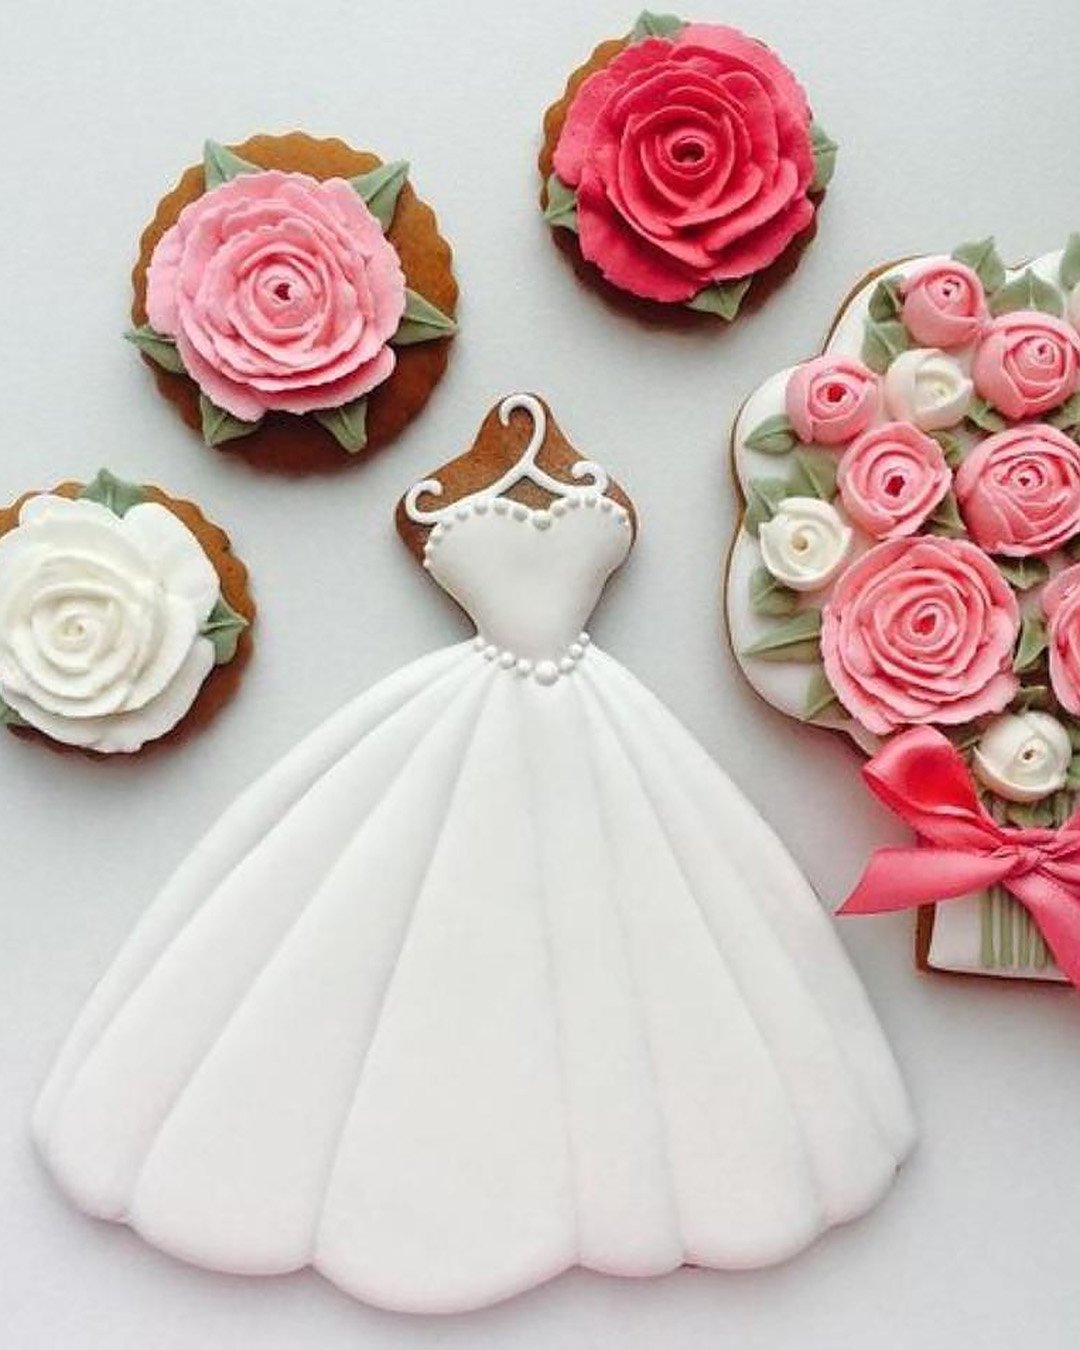 wedding cake cookies white bridal dress shape and flowers queen.cookies.tehran